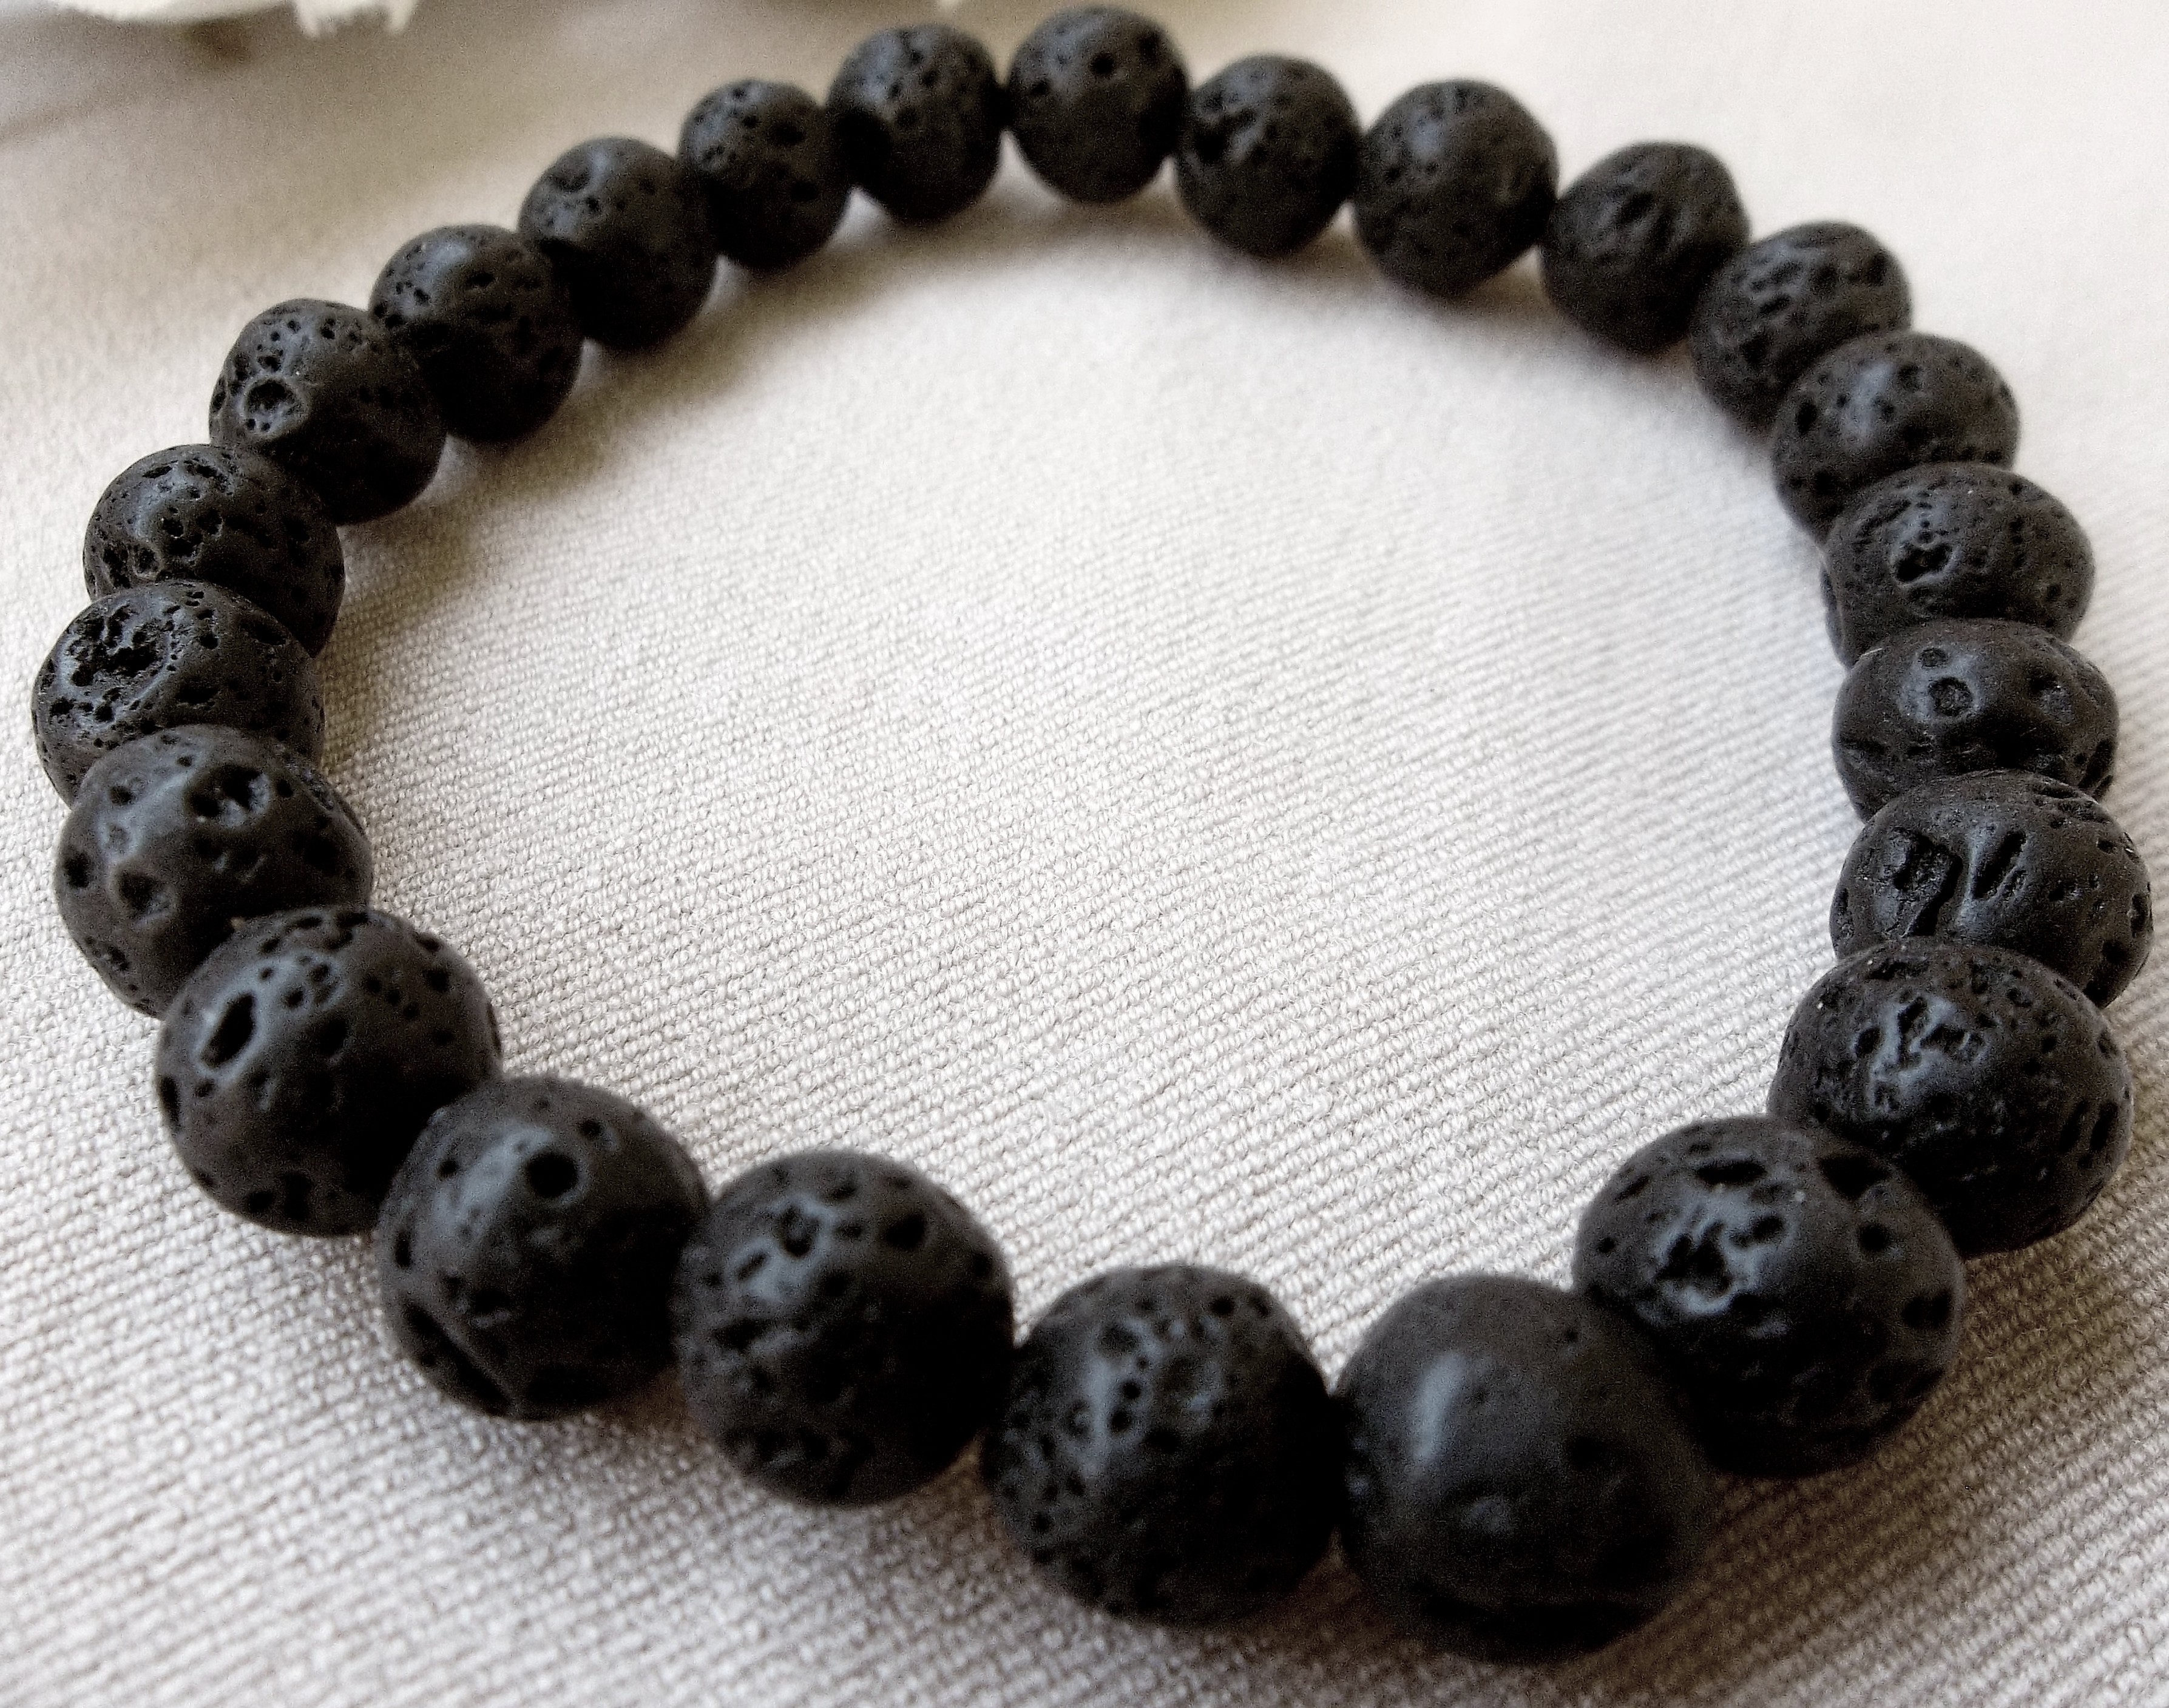 Bracelet Accessories, Volcanic Lava Beads